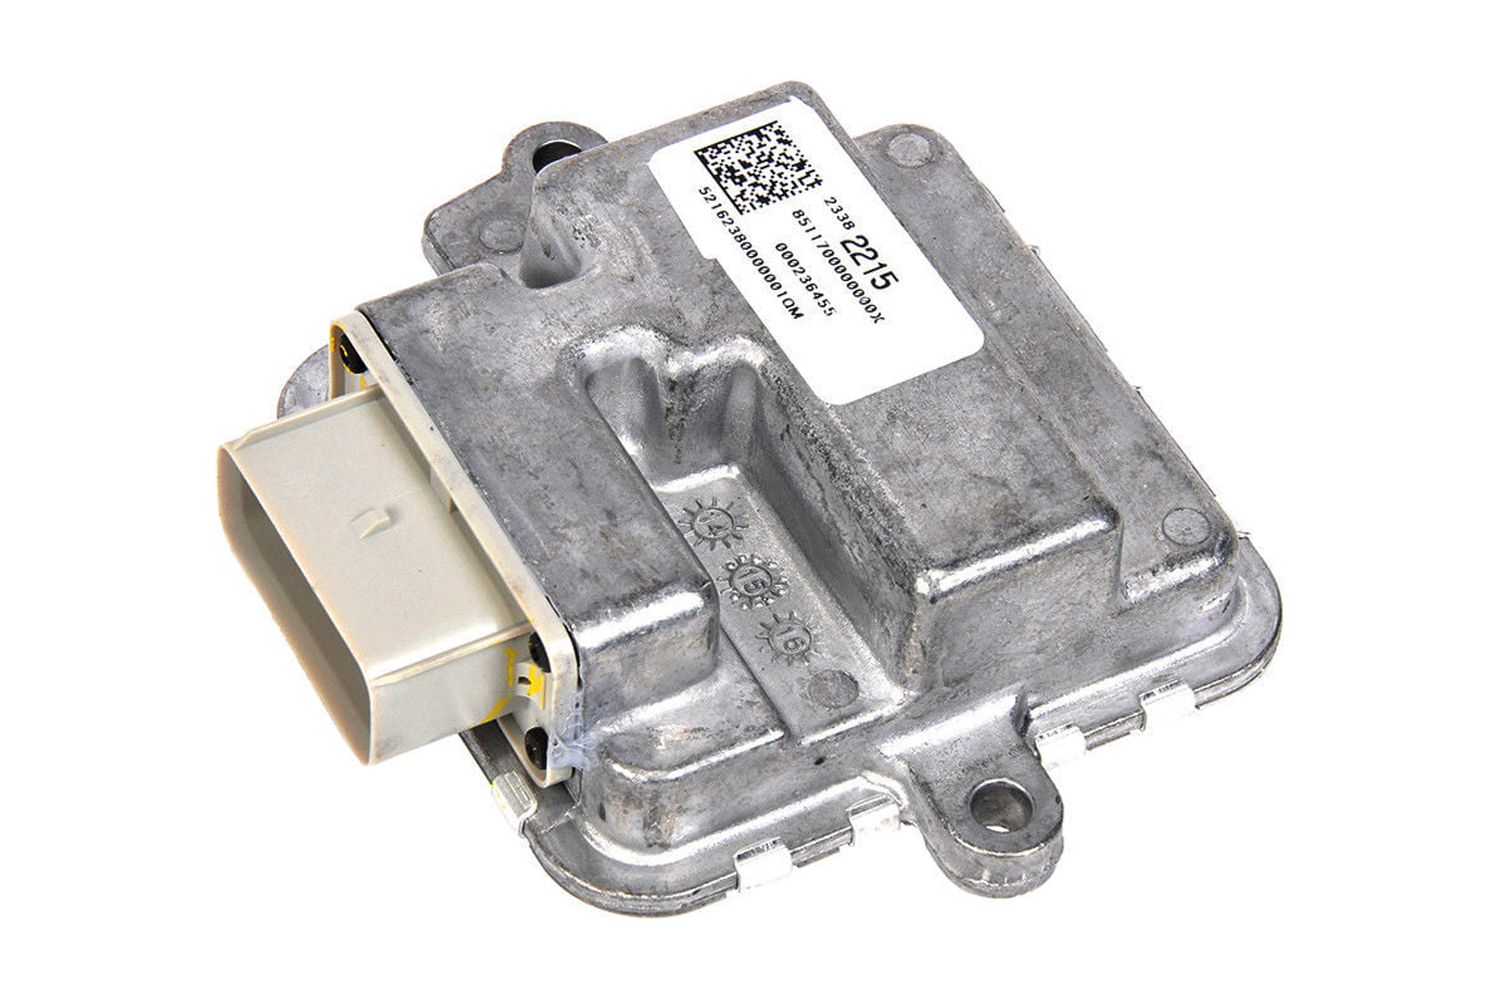 ACDelco GM Original Equipment 23382215 Fuel Pump Power Control Module - image 1 of 3